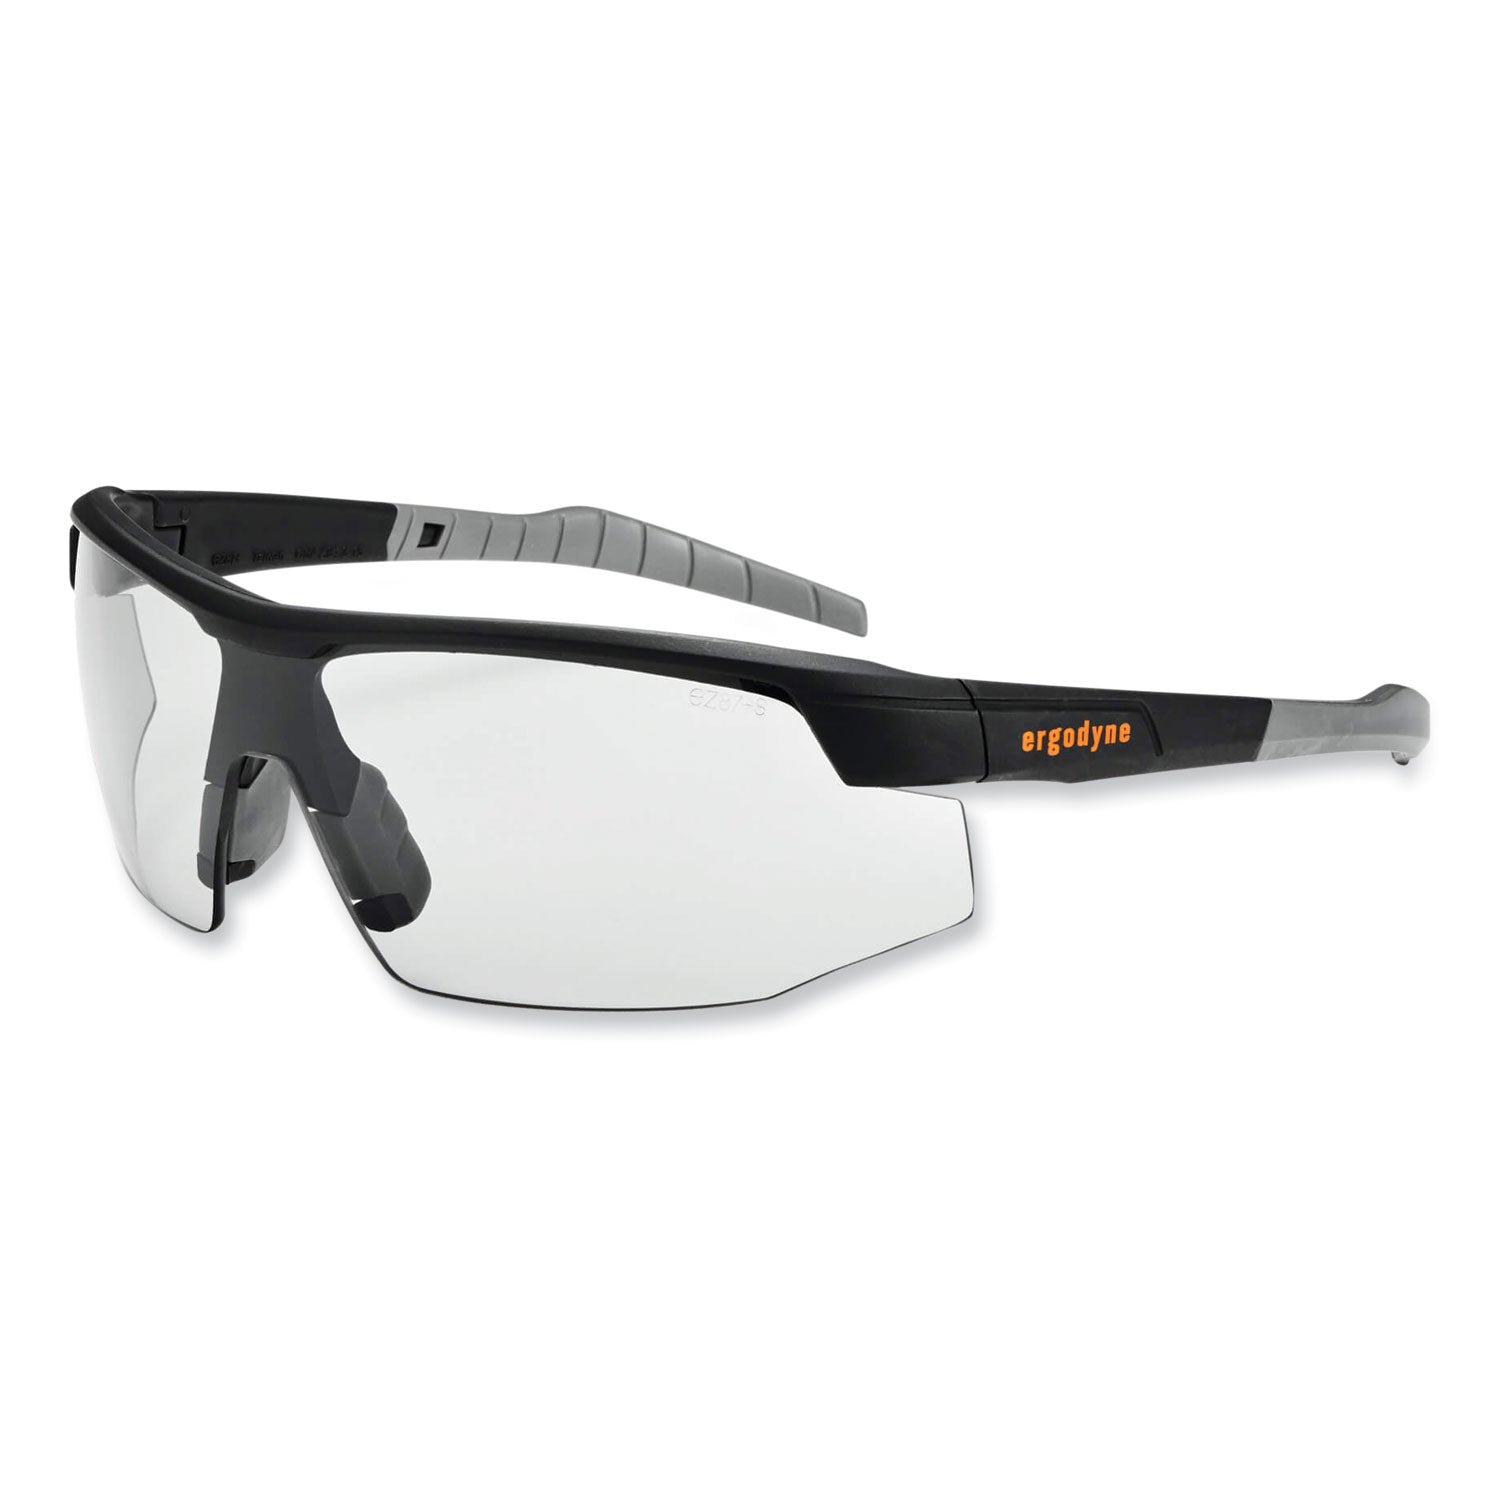 skullerz-skoll-safety-glasses-black-nylon-impact-frame-antifog-indoor-outdoor-polycarbon-lens-ships-in-1-3-business-days_ego59083 - 1